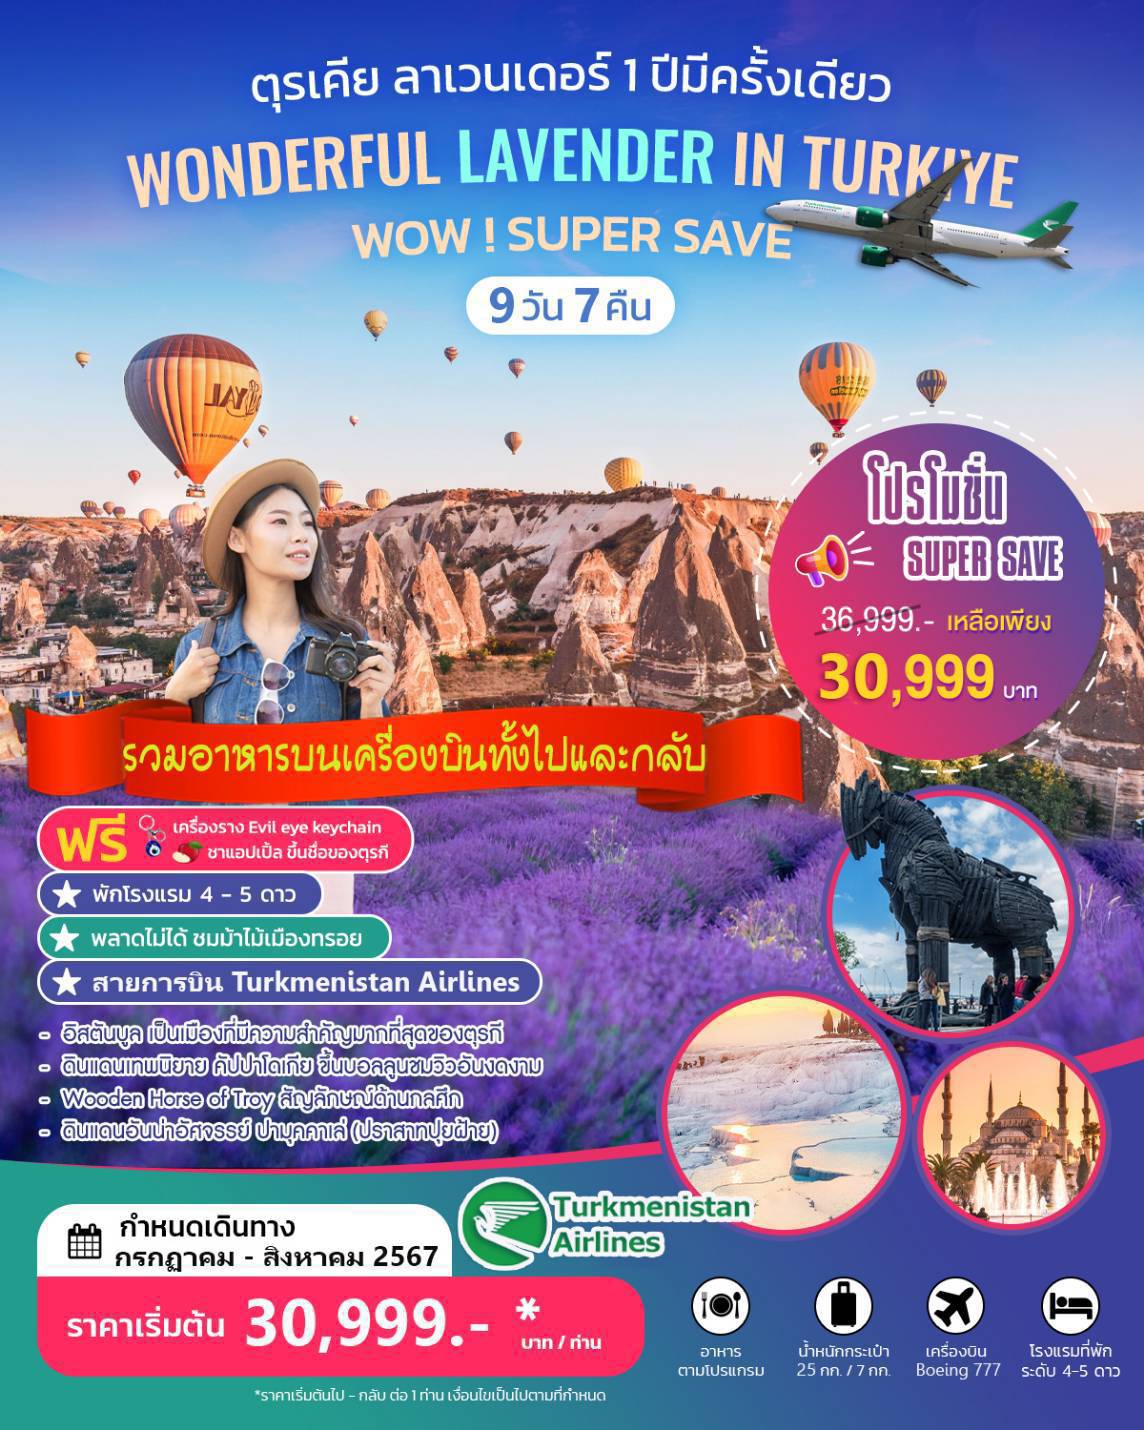 WONDERFUL LAVENDER IN TURKIYE 9D7N